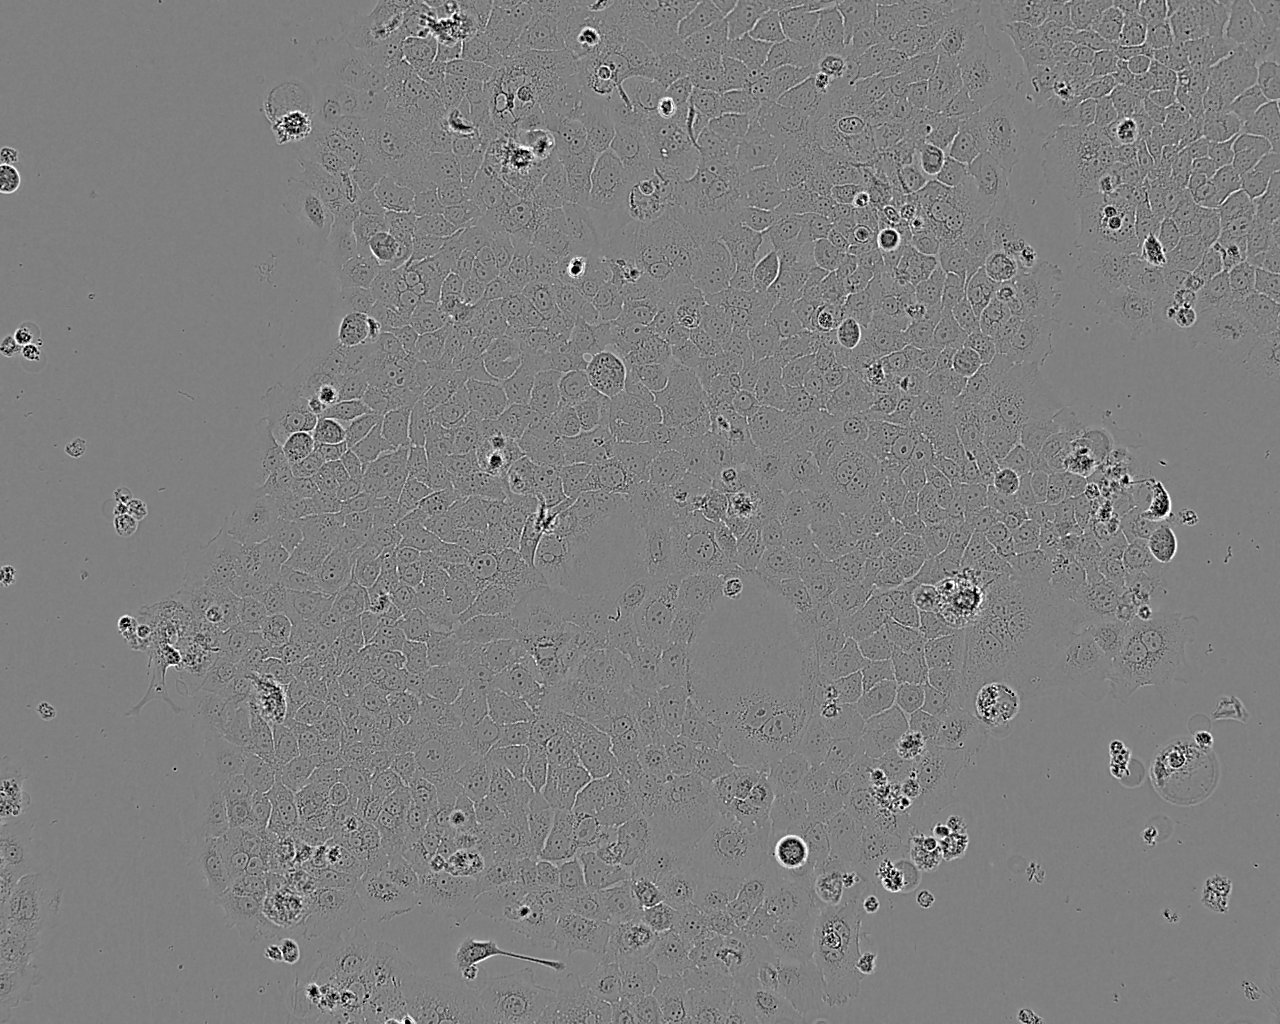 NCI-H1618 Cell:人小细胞肺癌细胞系,NCI-H1618 Cell